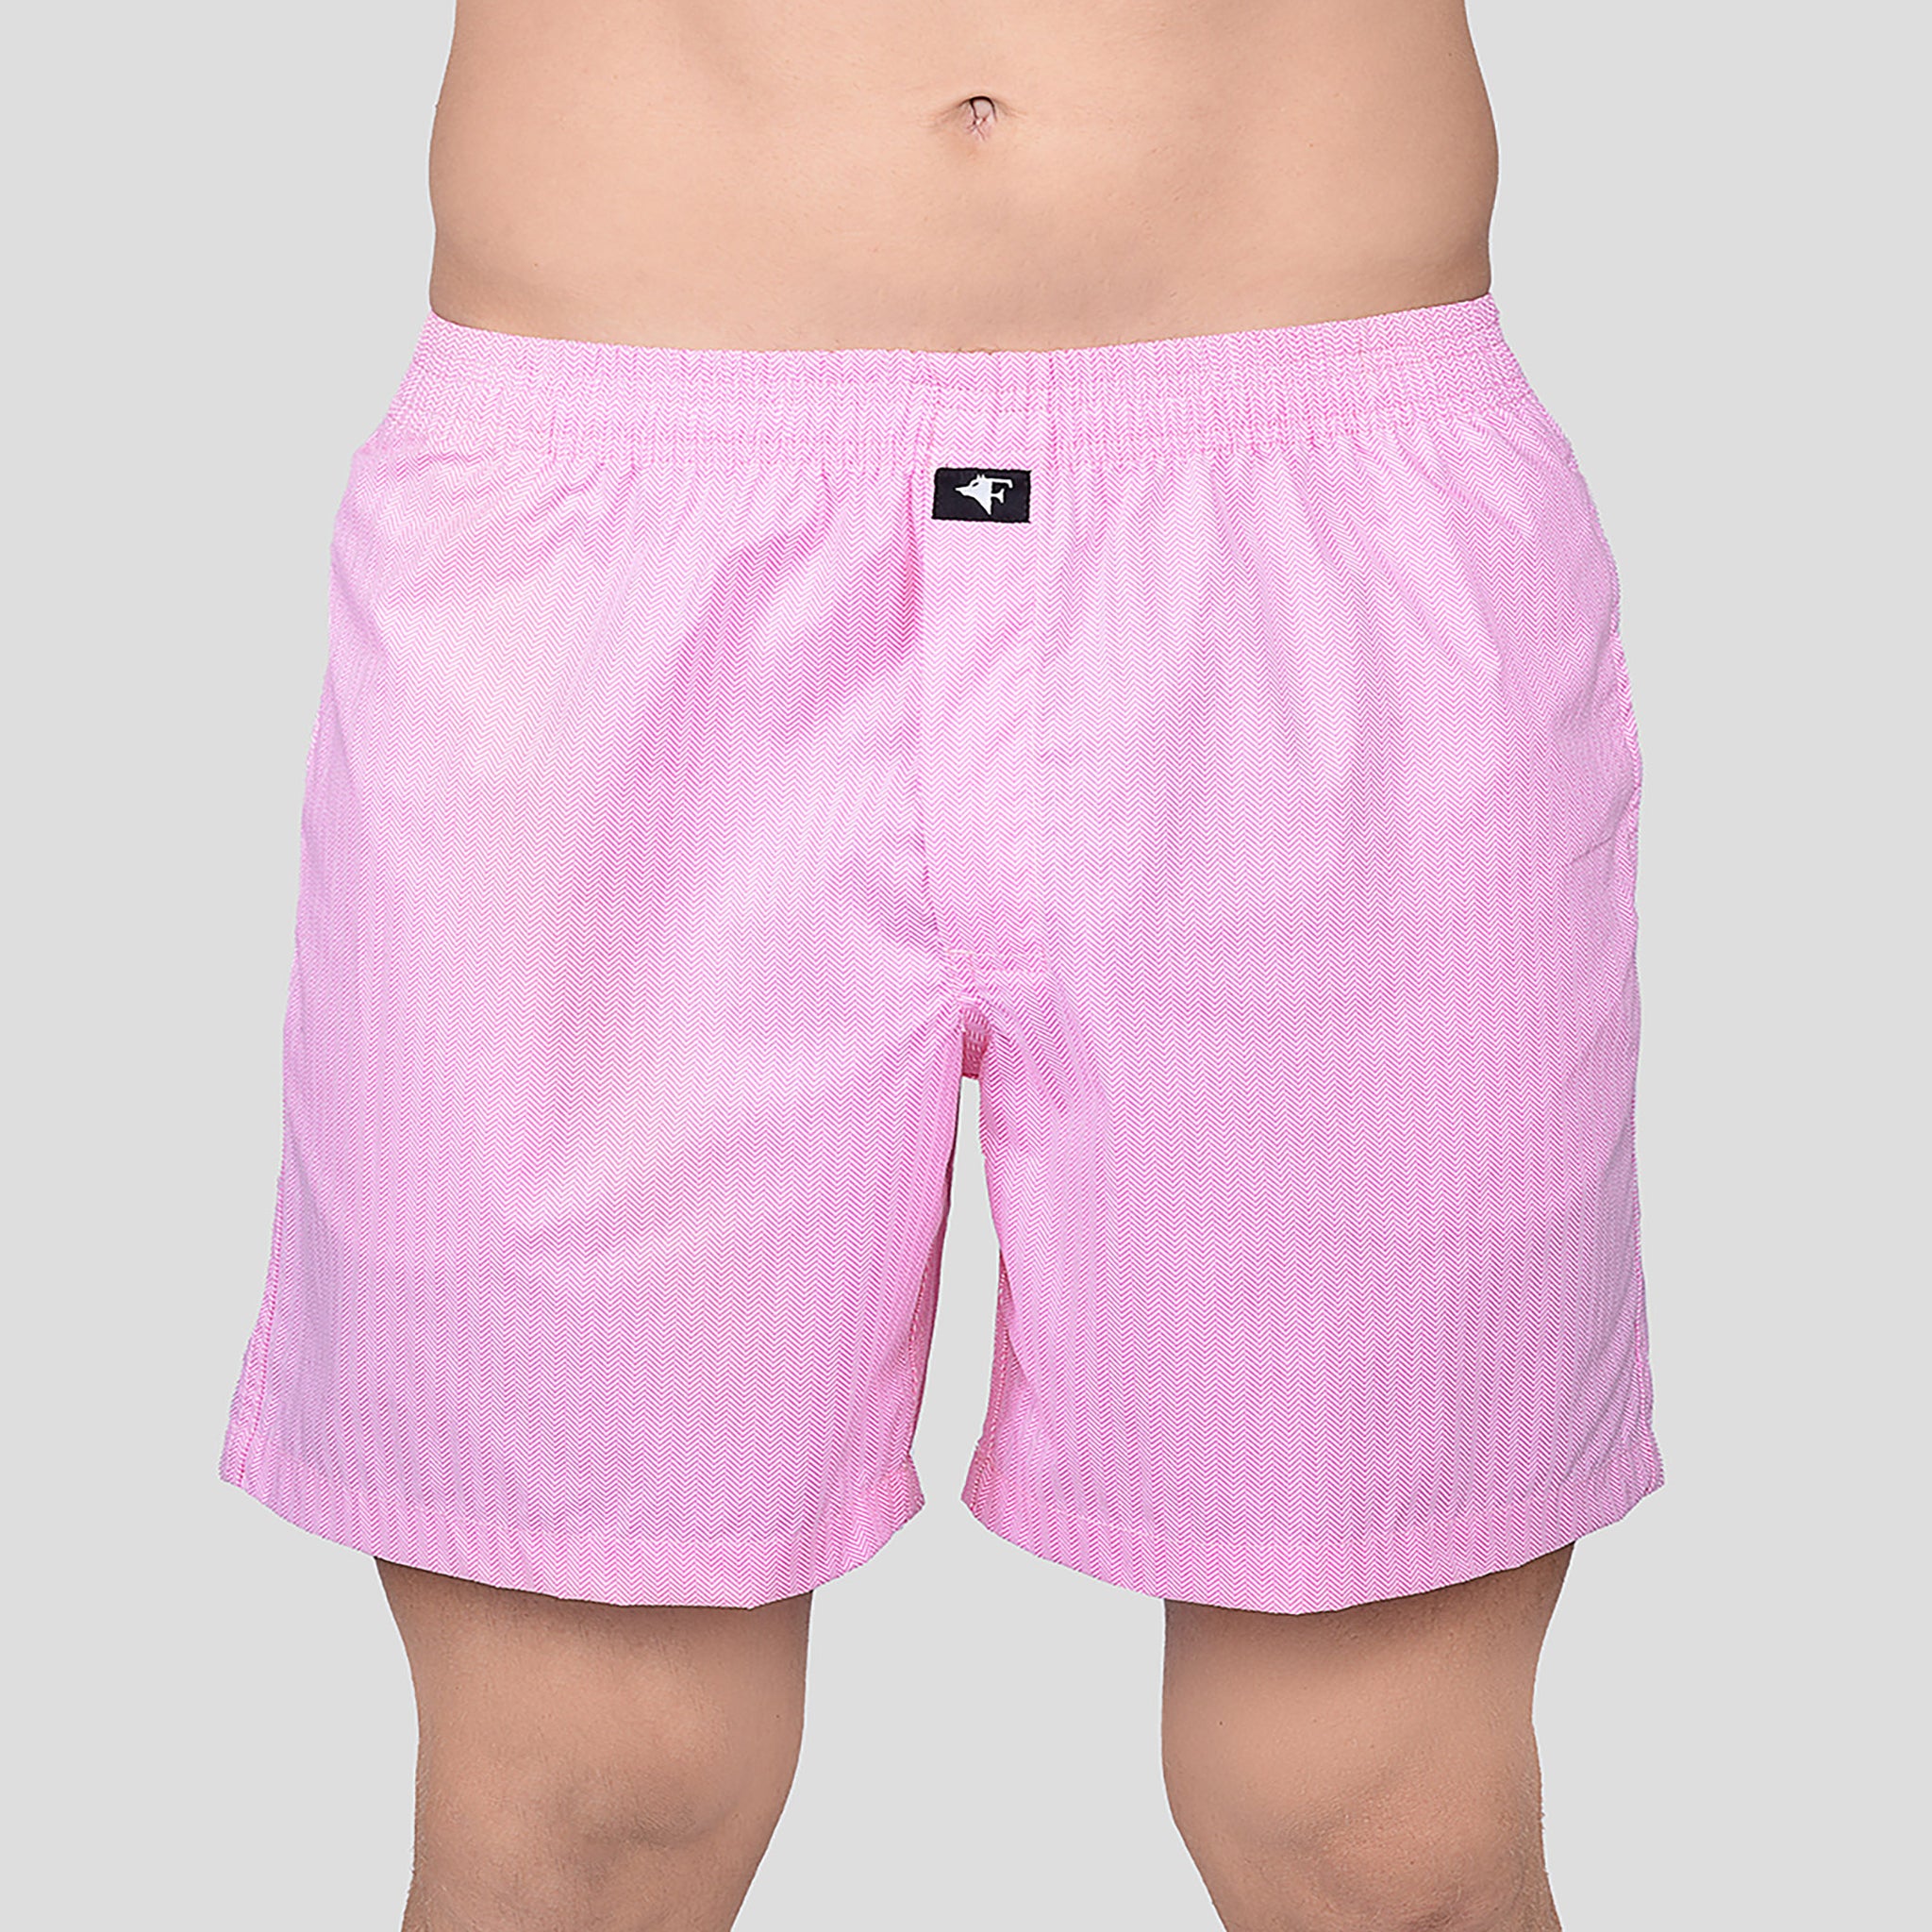 BOKSA Men's Printed Cotton Boxer Shorts with Side Pockets - Wave Pink